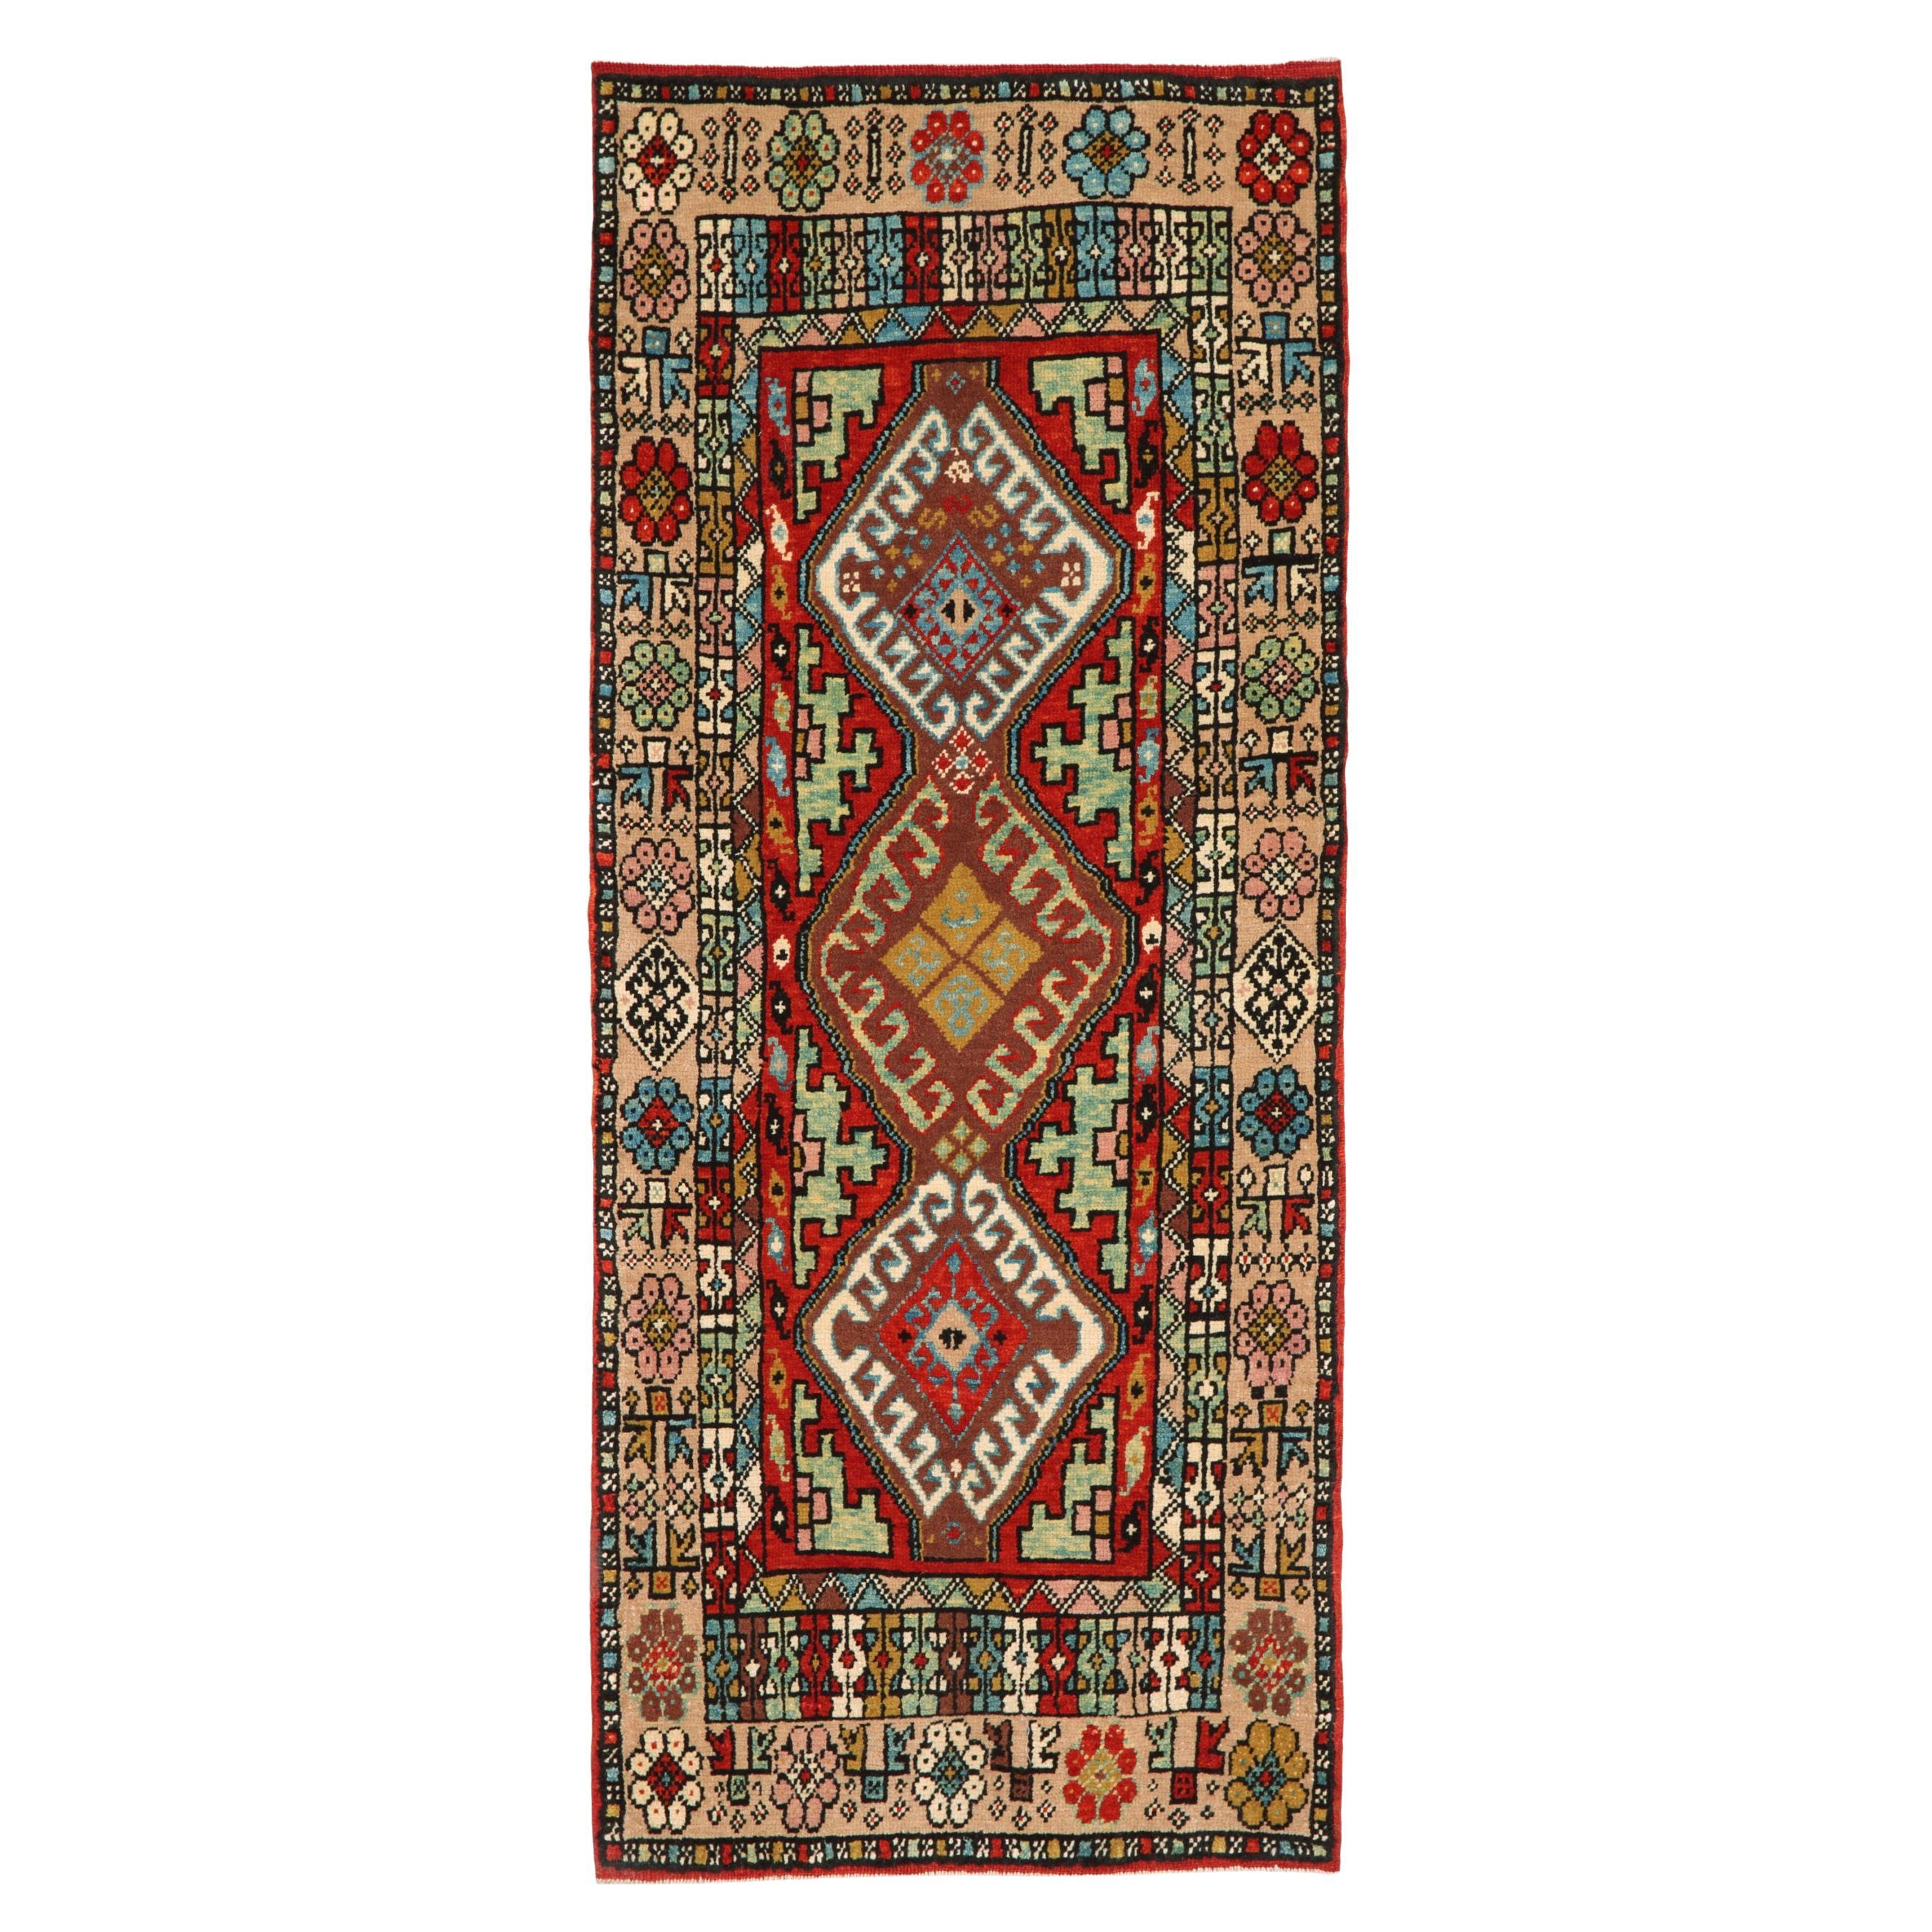 Ararat Rugs Anatolian Yastik Rug Revival Turkish Wagireh Carpet Natural Dyed